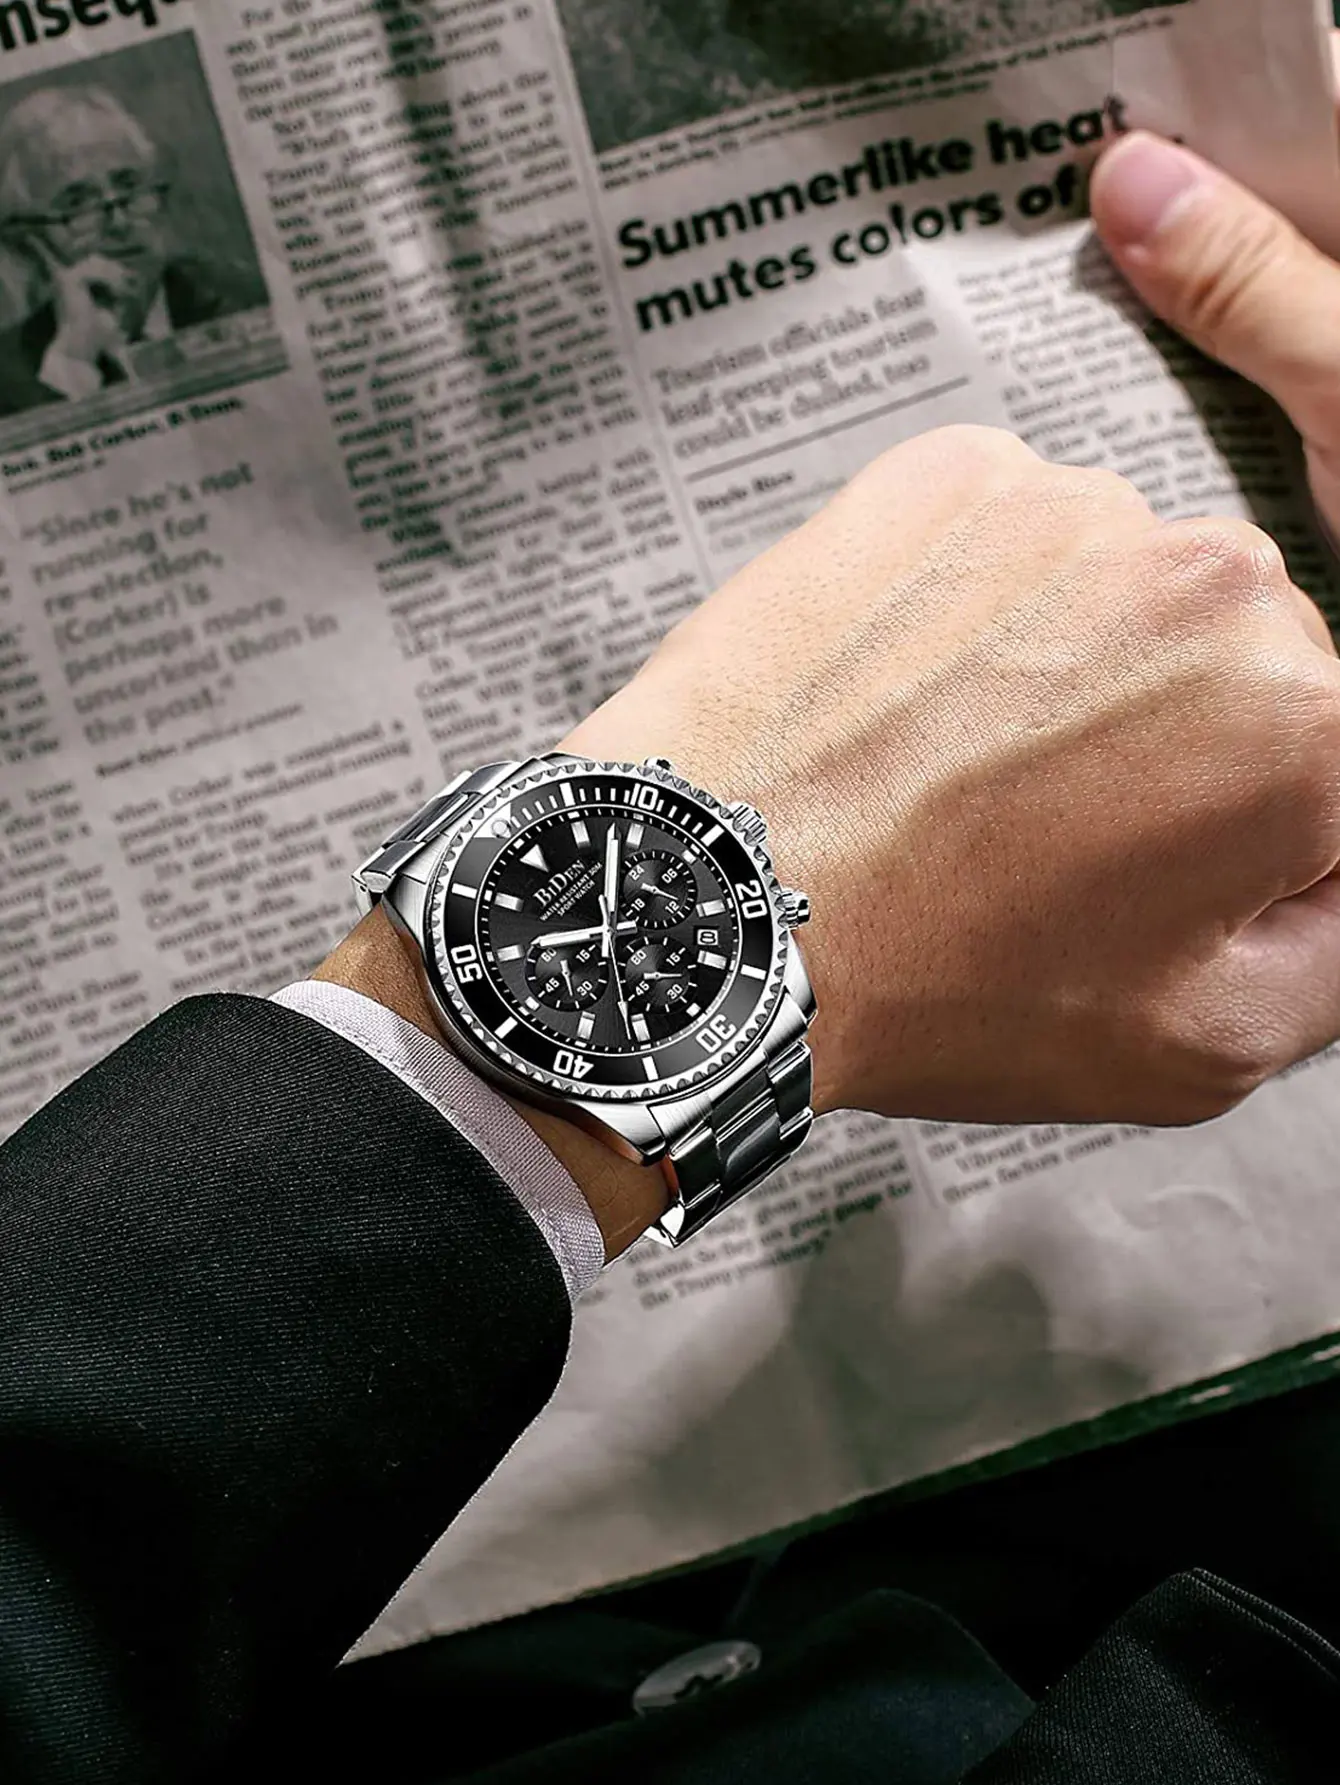 

BIDEN Men's Watch Military Watch Stainless Steel Chronograph Waterproof Luminous Design Watch Watch Elegant Sports Analog Date